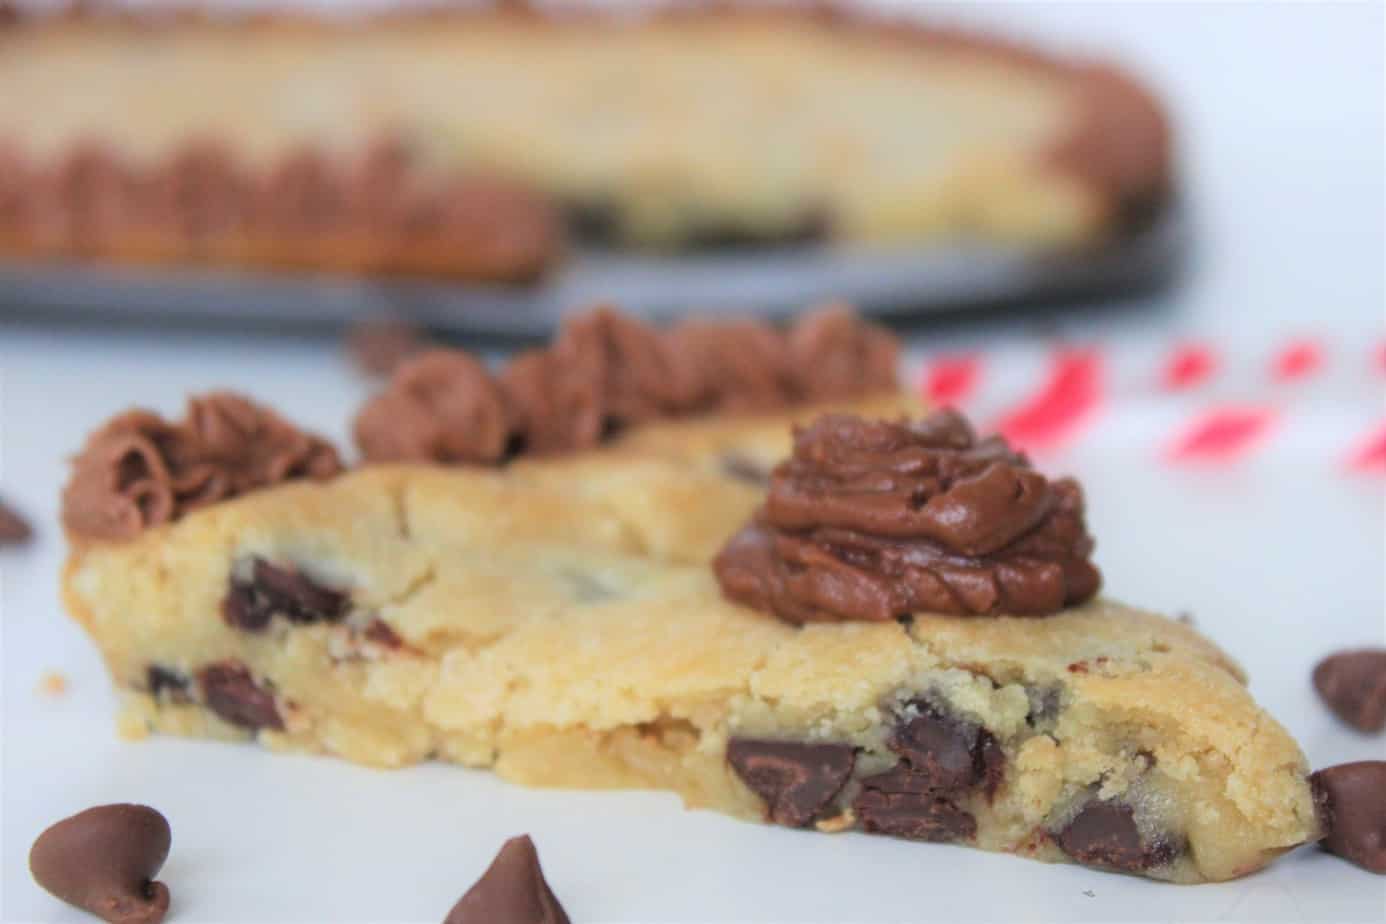 Chocolate Chip Cookie Cake Recipe